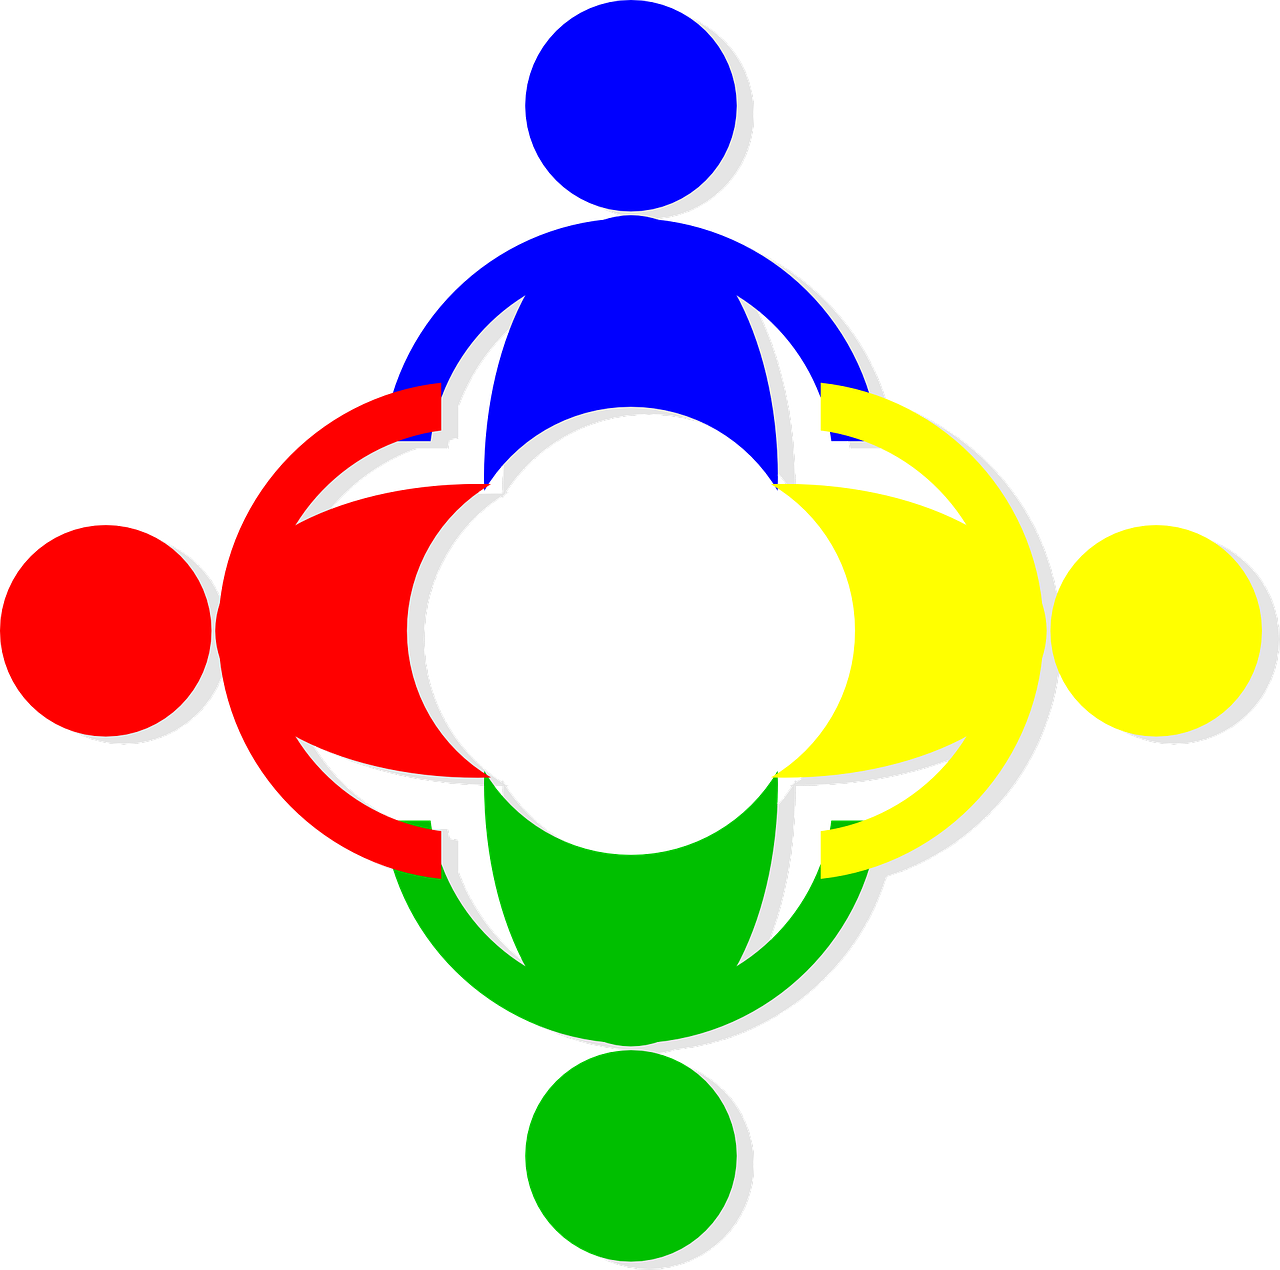 human chain emblem logo free photo